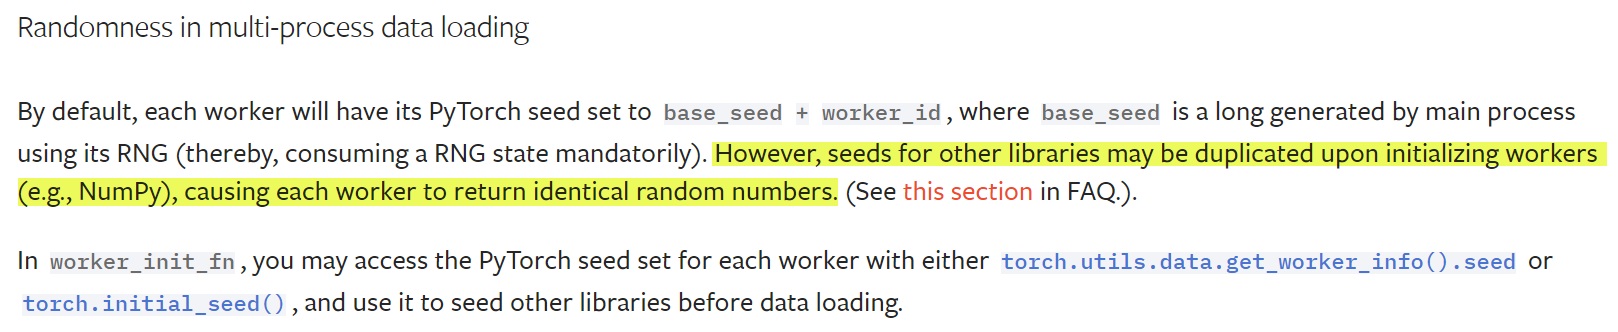 Randomness in multi-process data loading